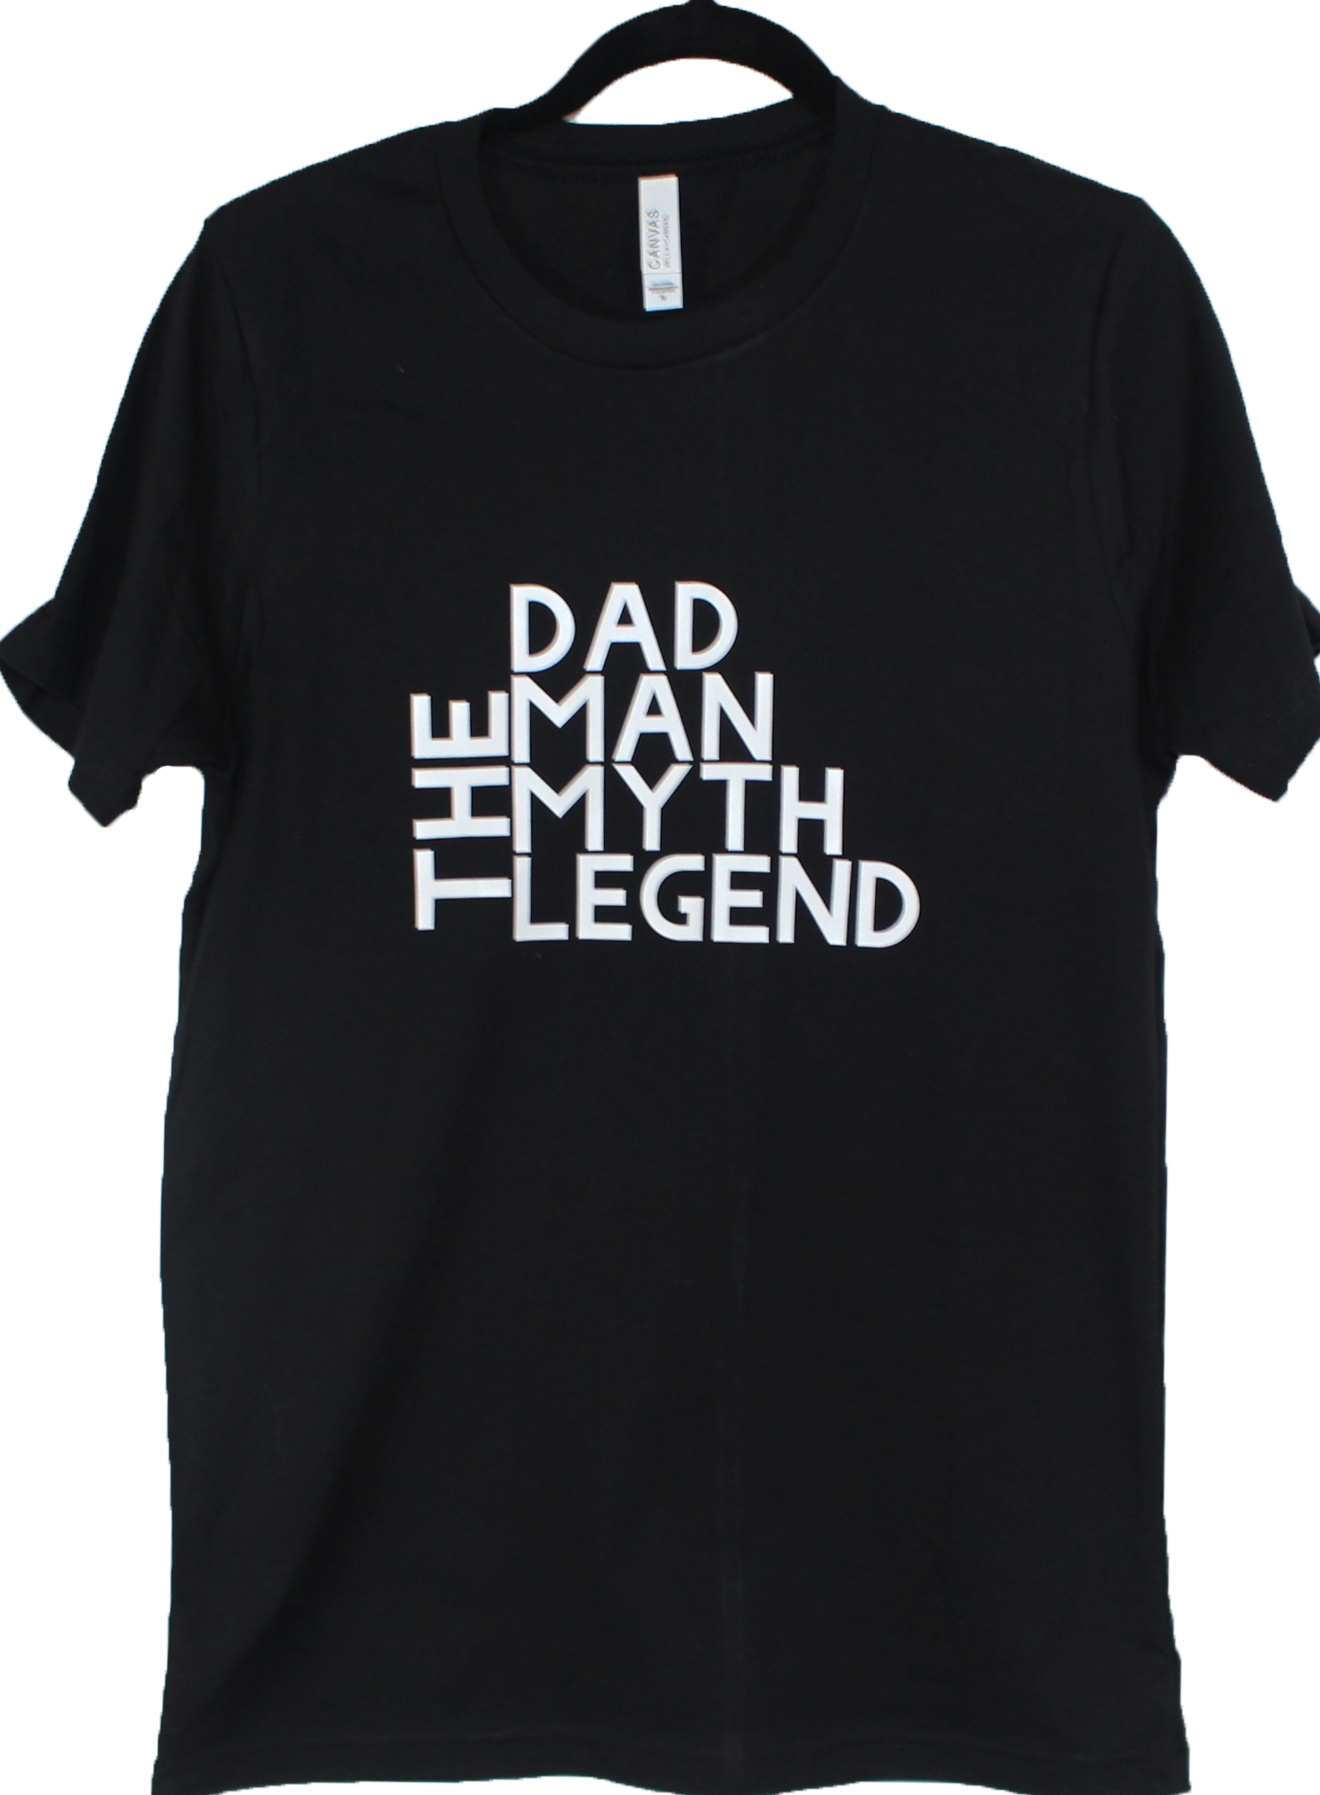  Myth Legend Dad Festival Quote Brooch Pin Dress Shirt